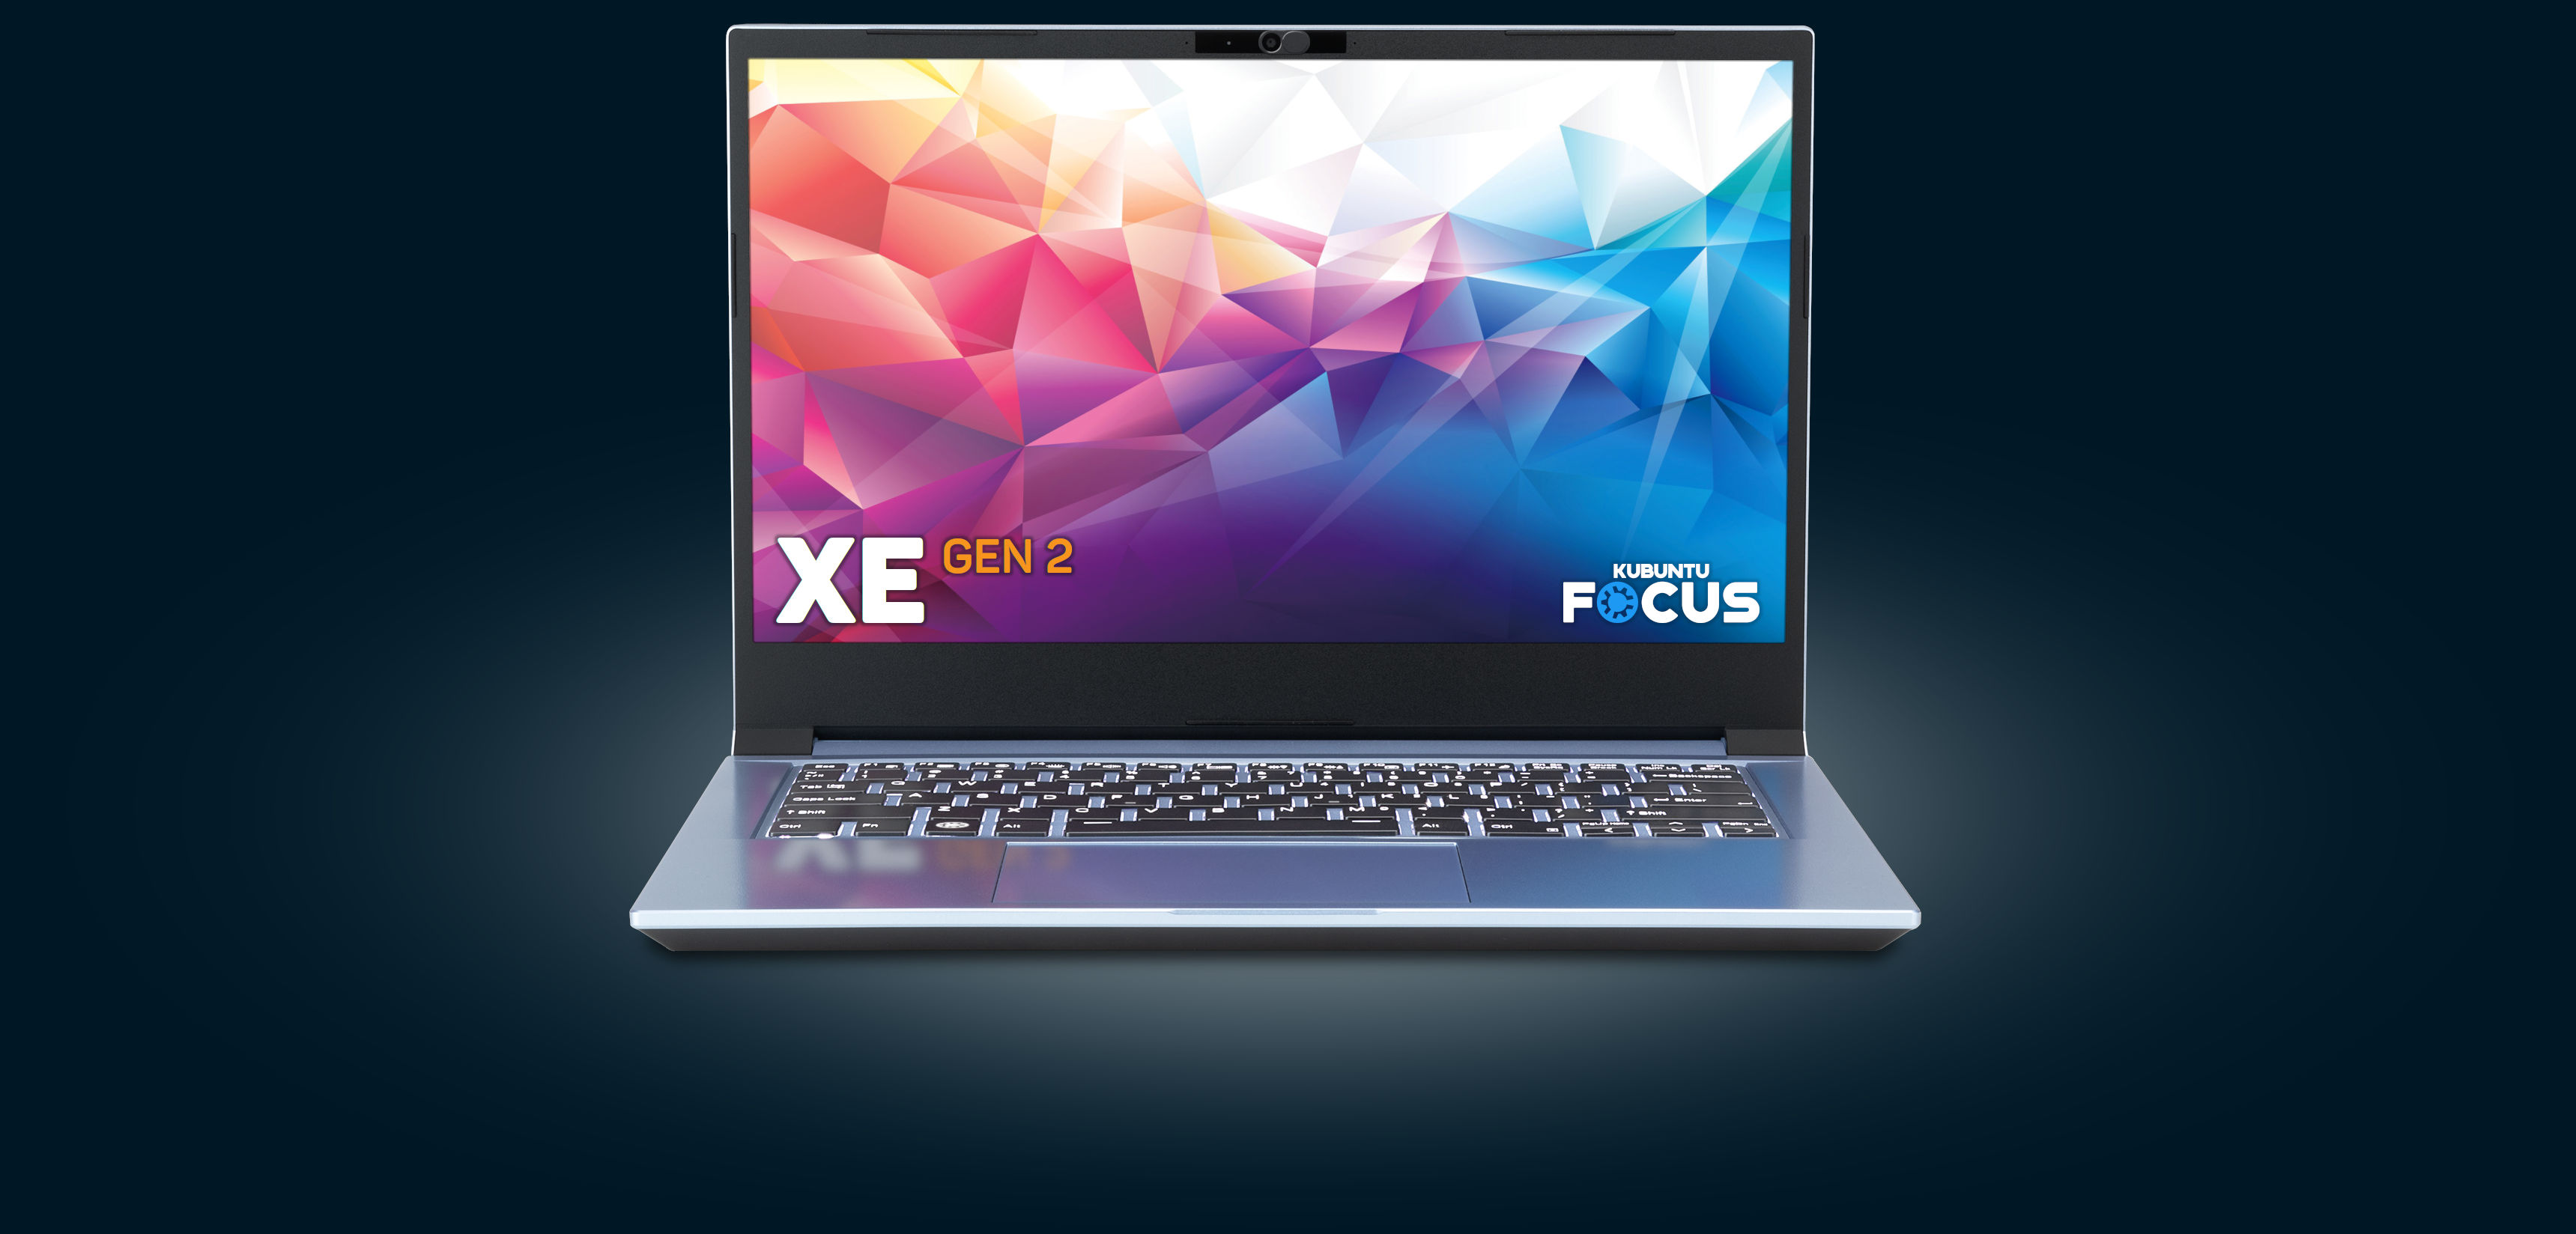 Kubuntu Focus XE GEN 2